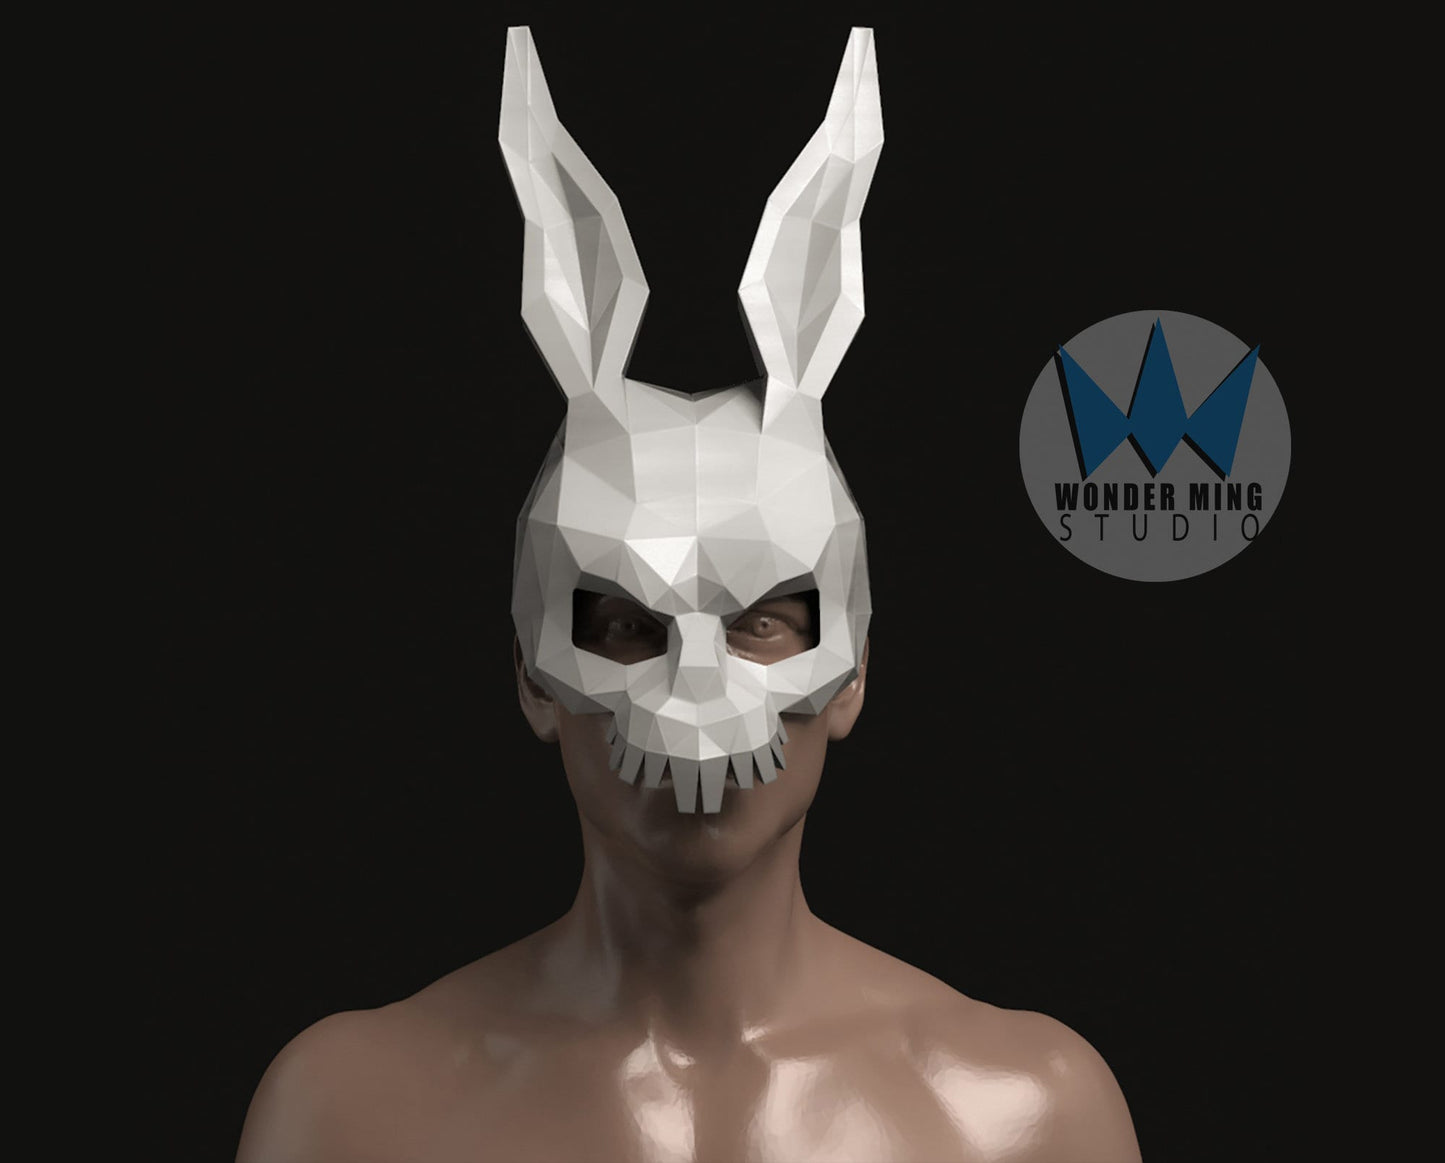 Frank Rabbit Mask, Donnie Darko Mask